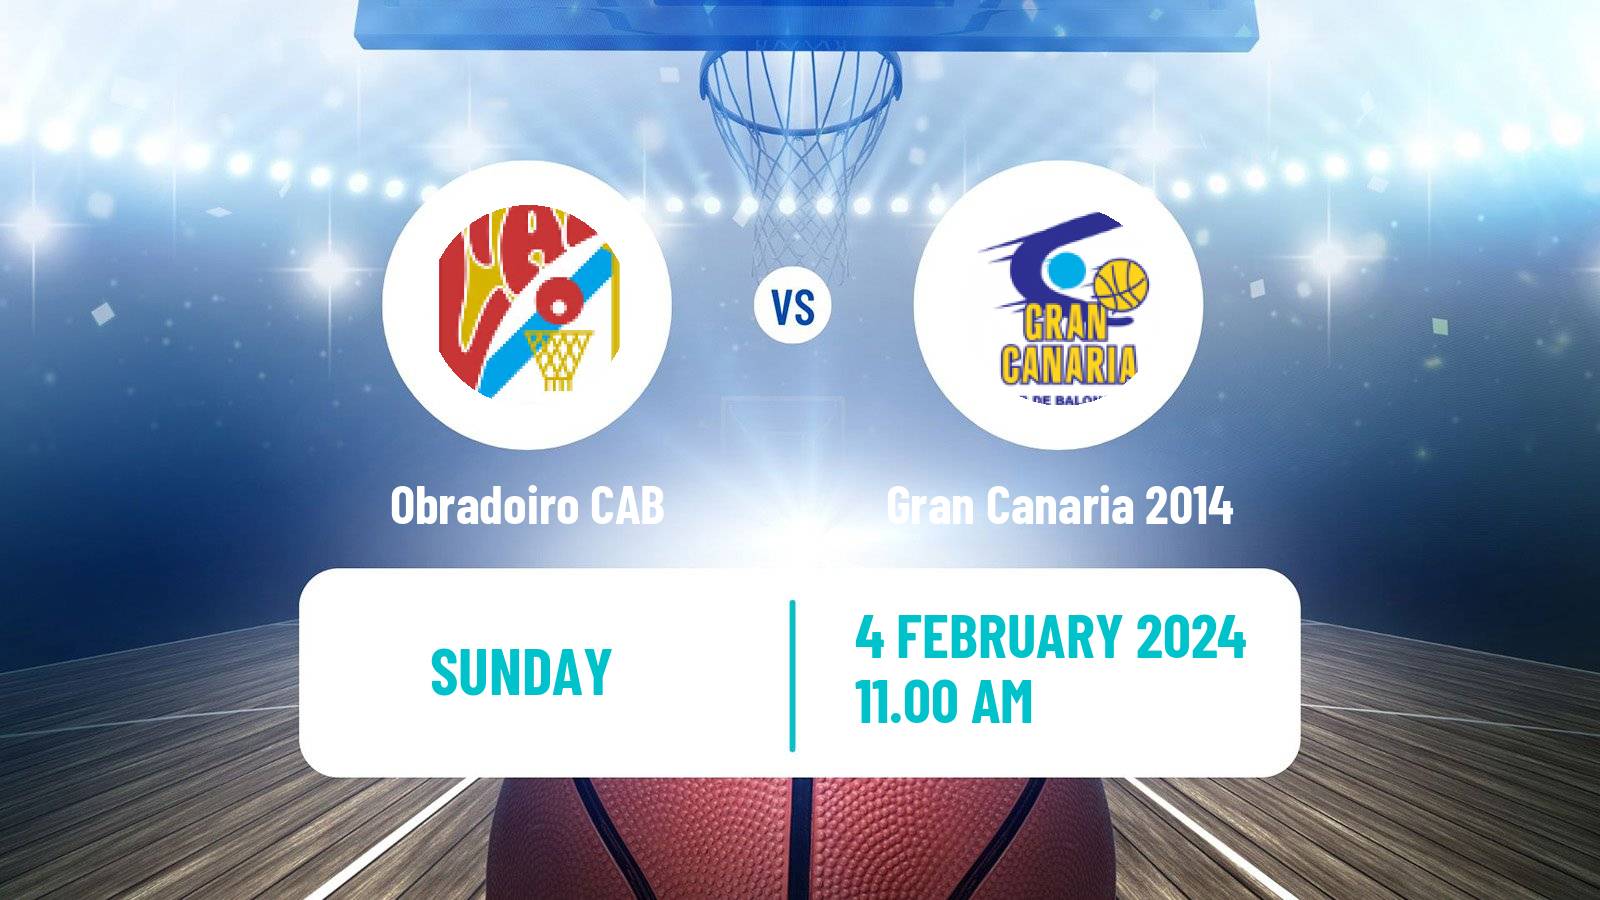 Basketball Spanish ACB League Obradoiro CAB - Gran Canaria 2014